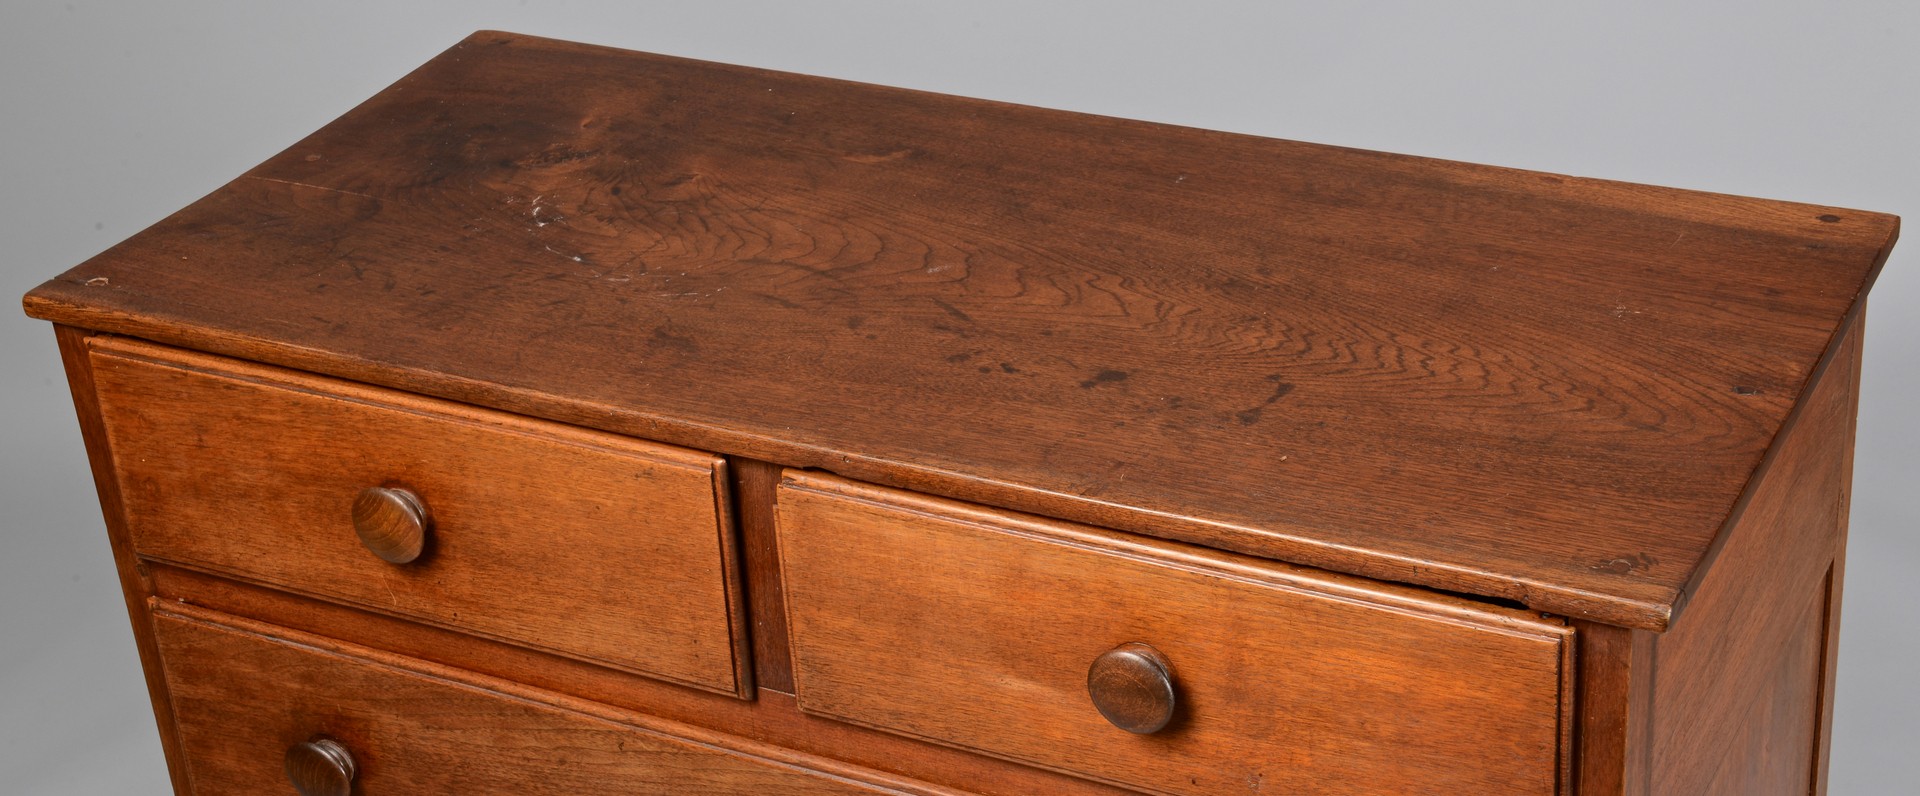 Lot 111: East TN walnut chest of drawers, elaborate apron